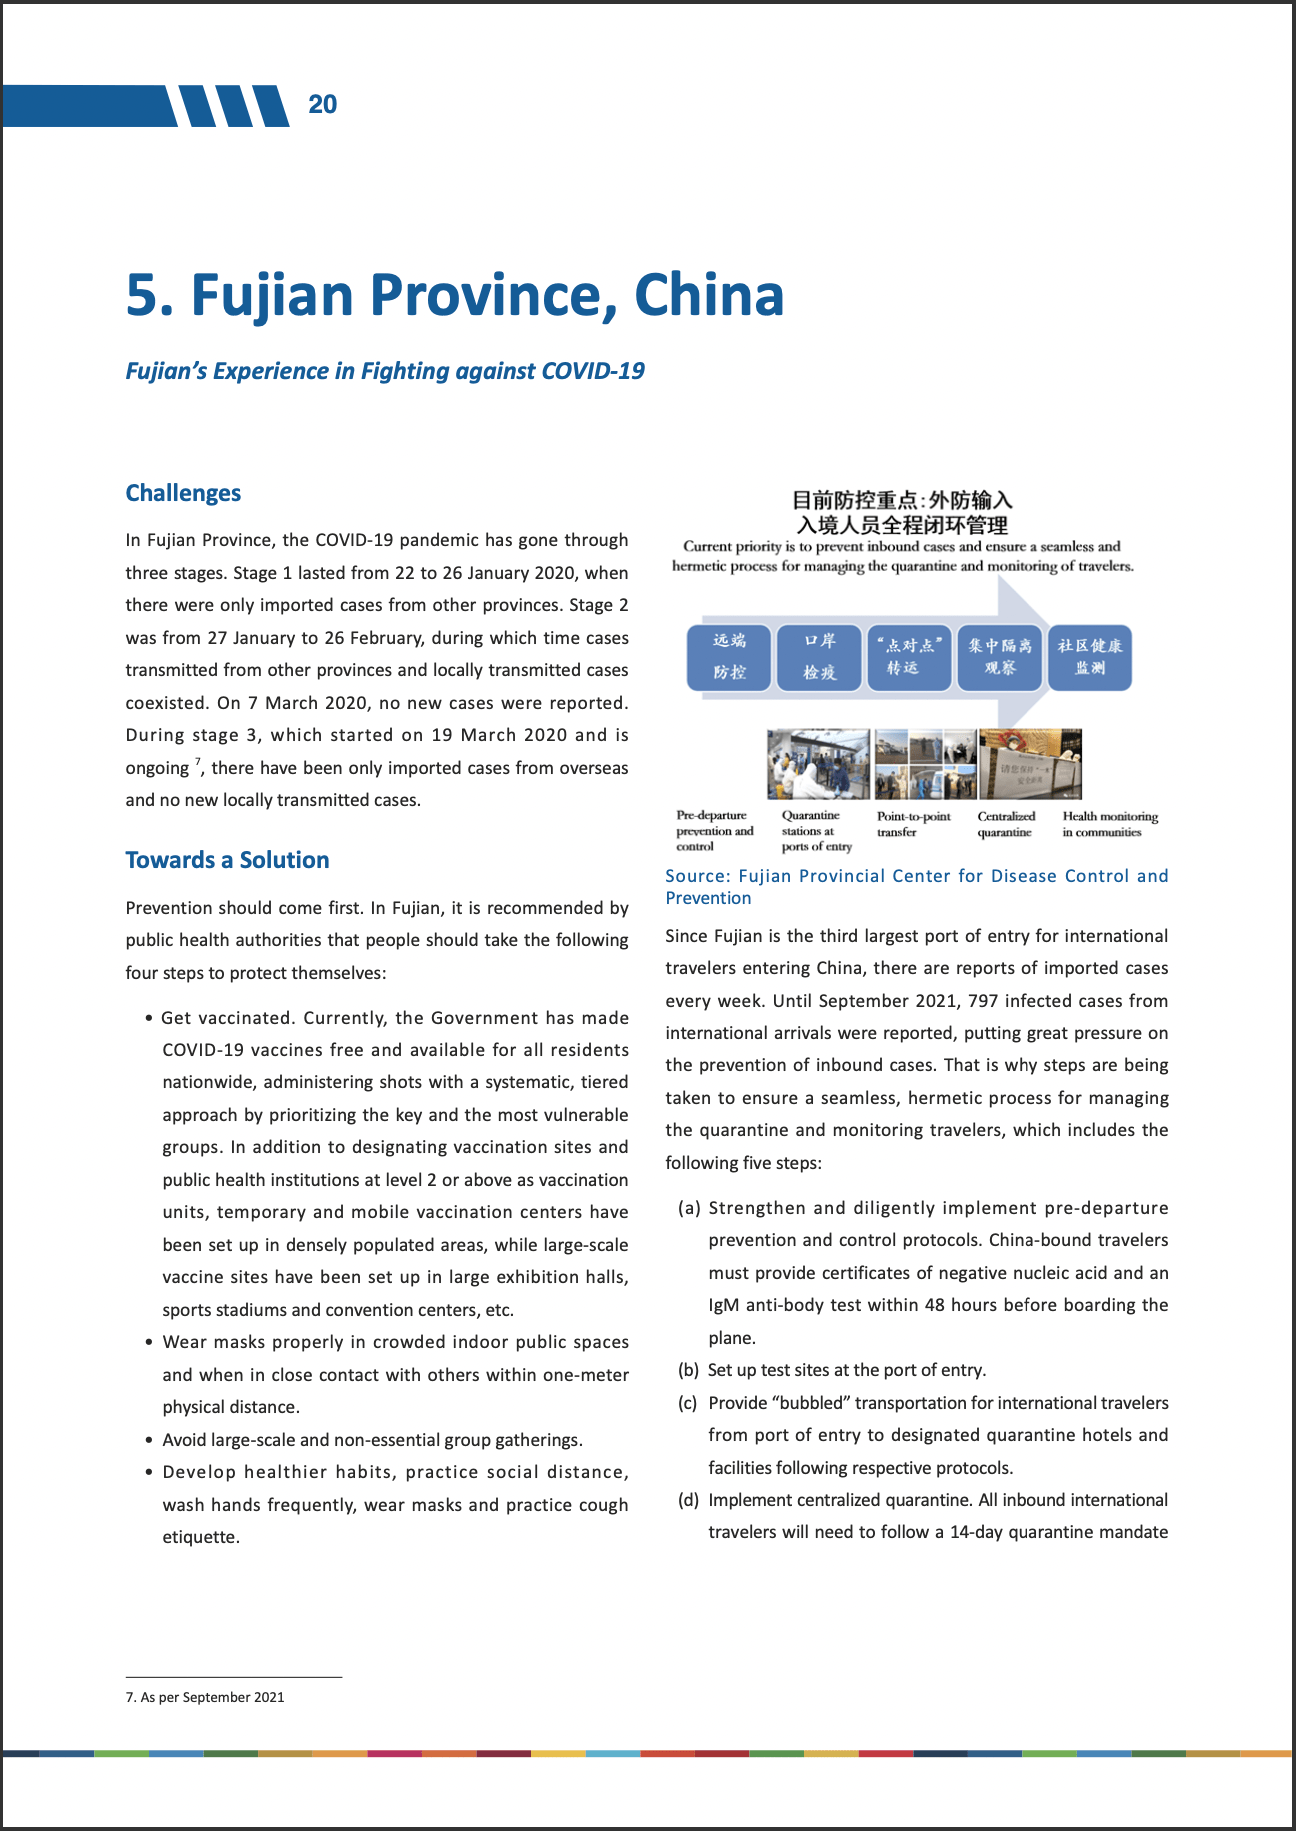 Fujian’s Experience in Fighting COVID-19 – Fujian, China